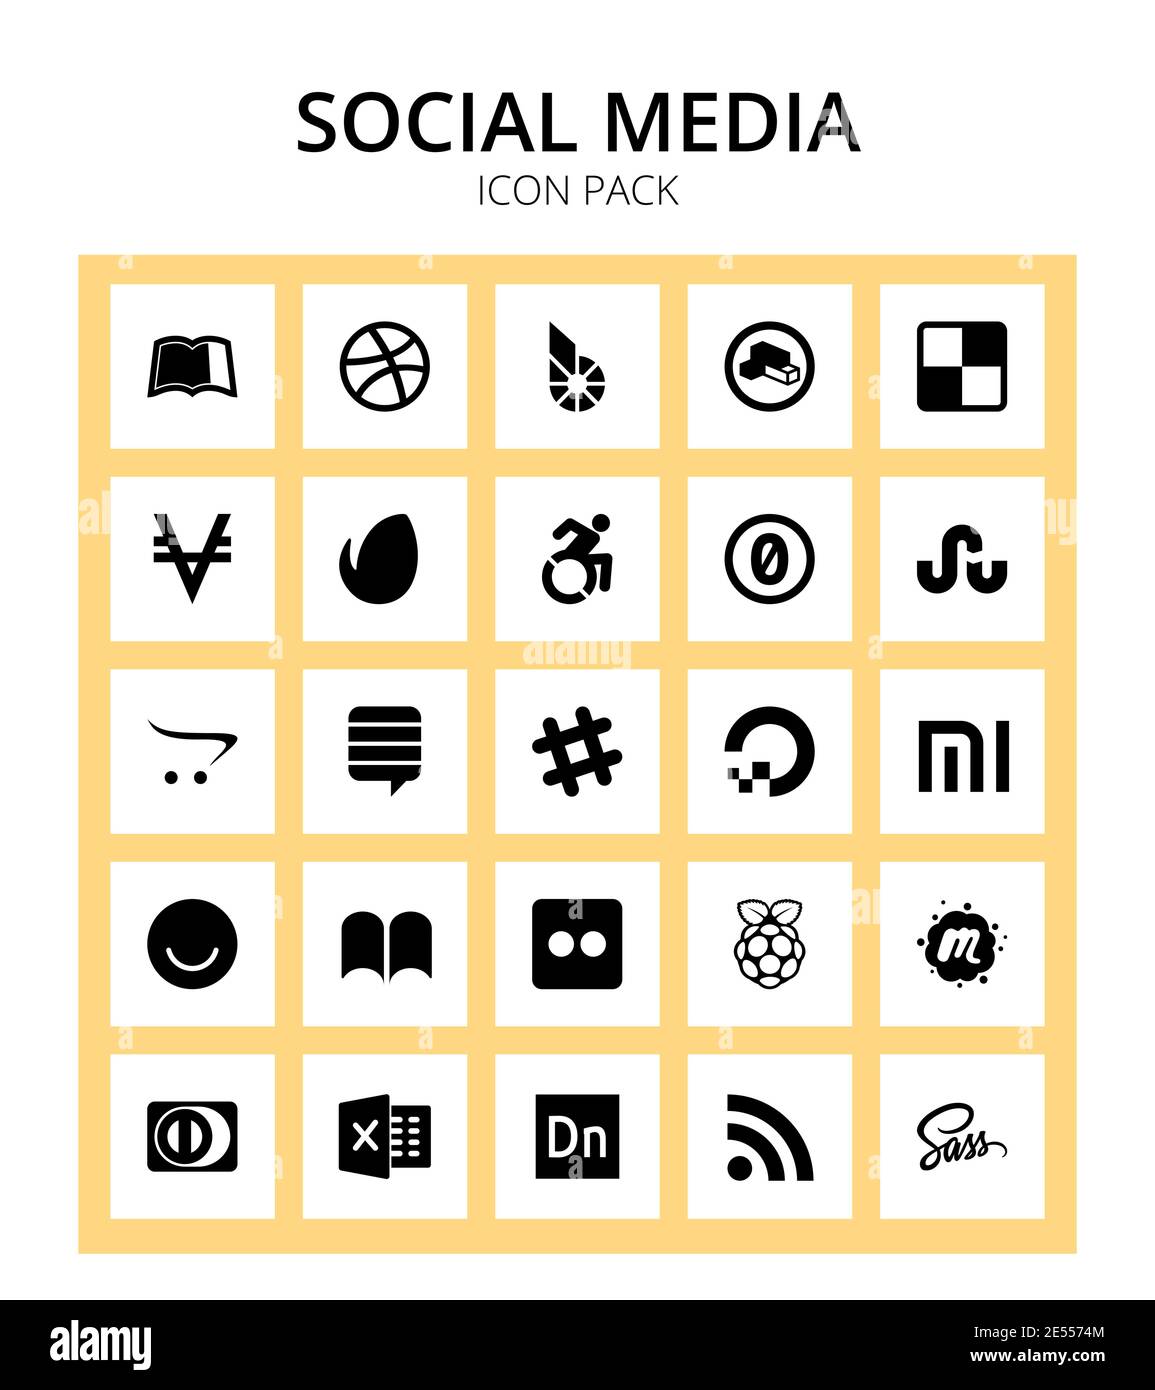 25 Social icon exchange, opencart, envato, stumbleupon, commons Editable Vector Design Elements Stock Vector